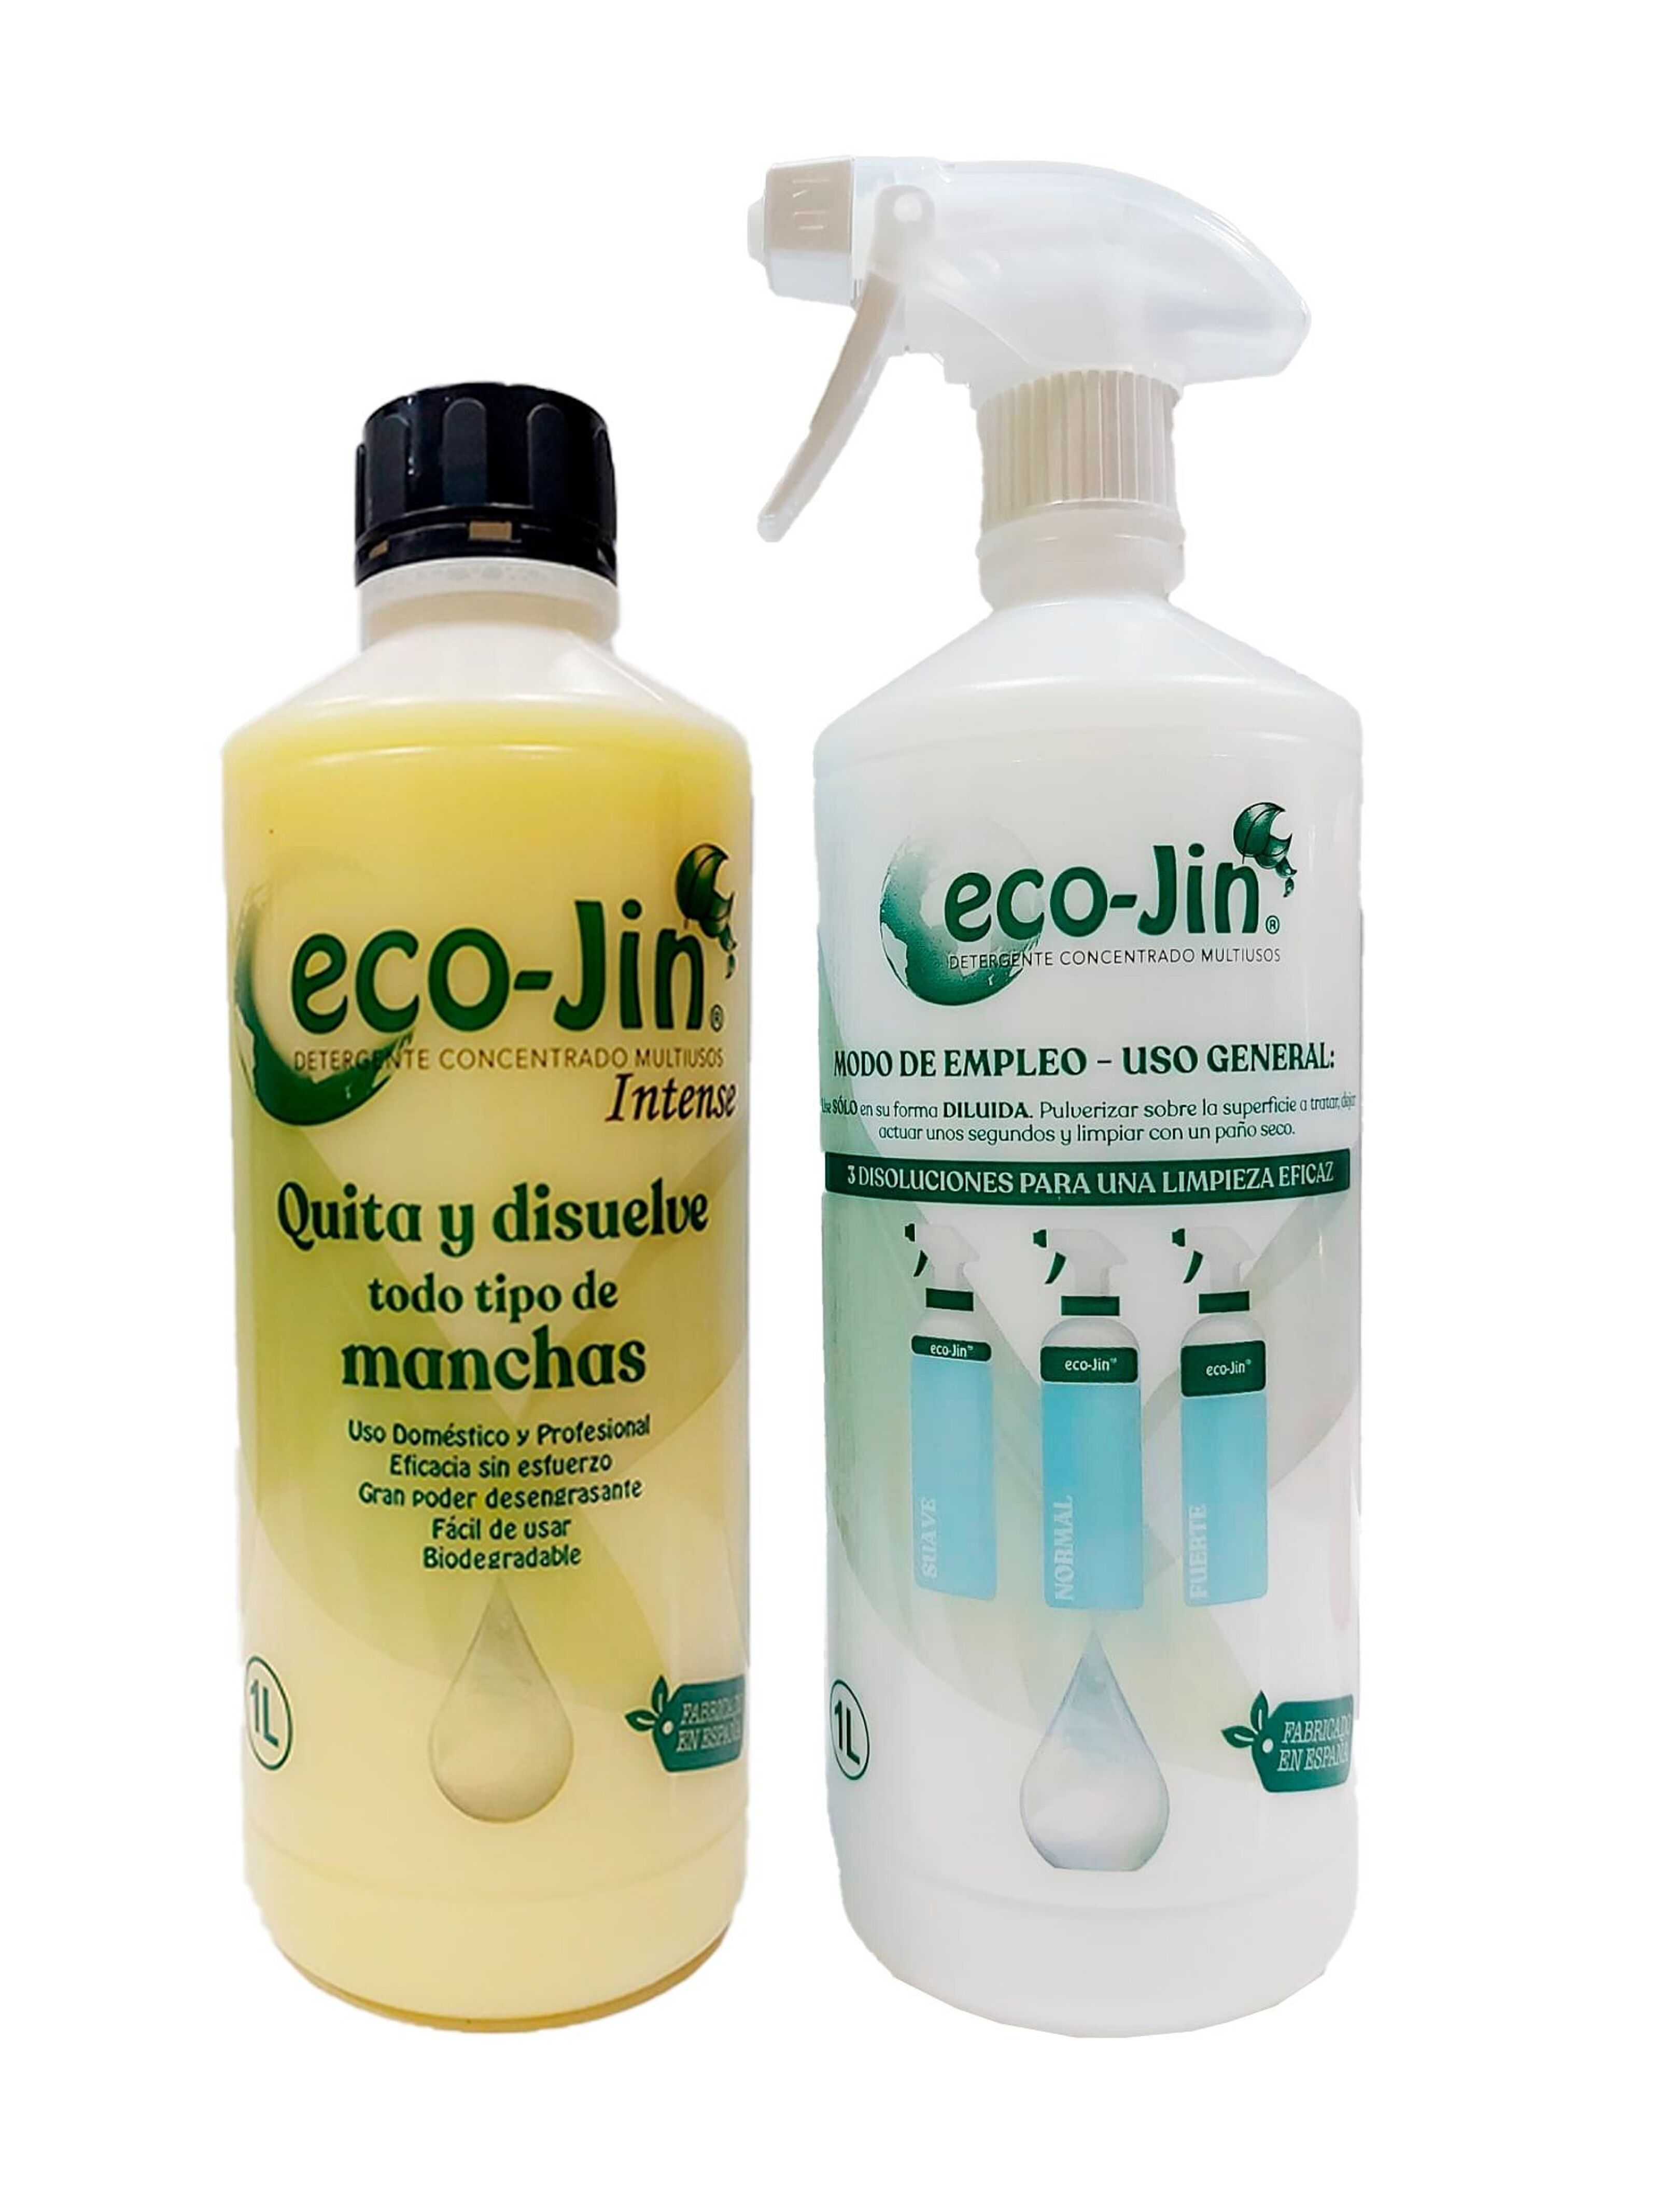 Eco-Jin